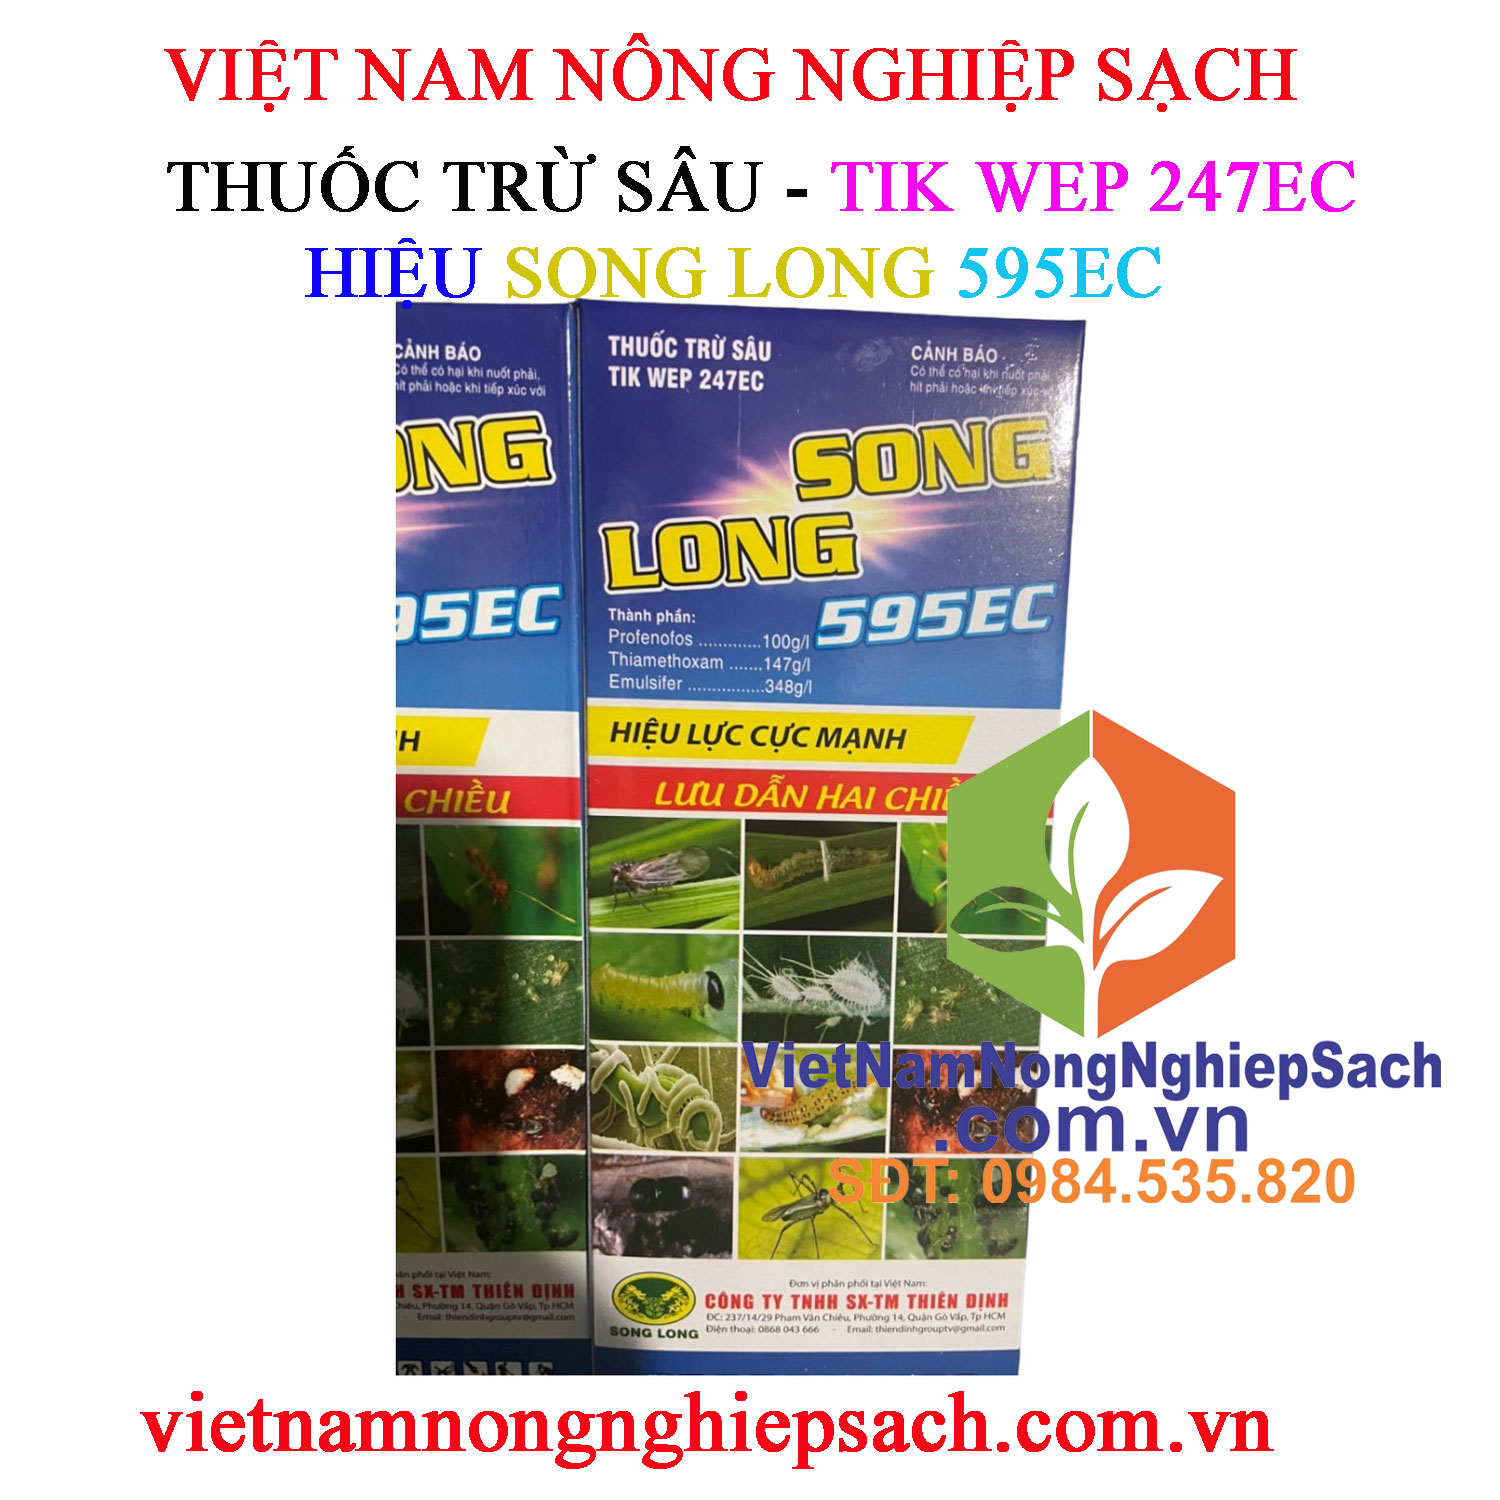 SONG-LONG-595EC